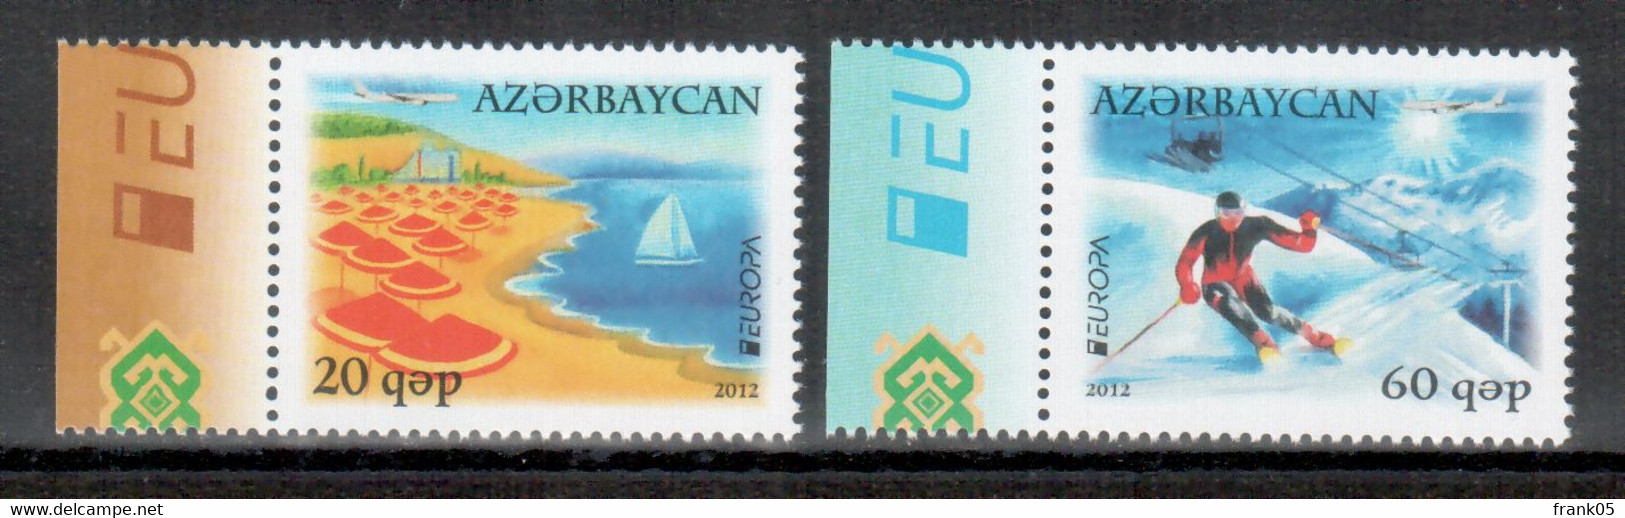 Aserbaidschan / Azerbaijan / Azerbaidjan 2012 Satz/set EUROPA ** - 2012